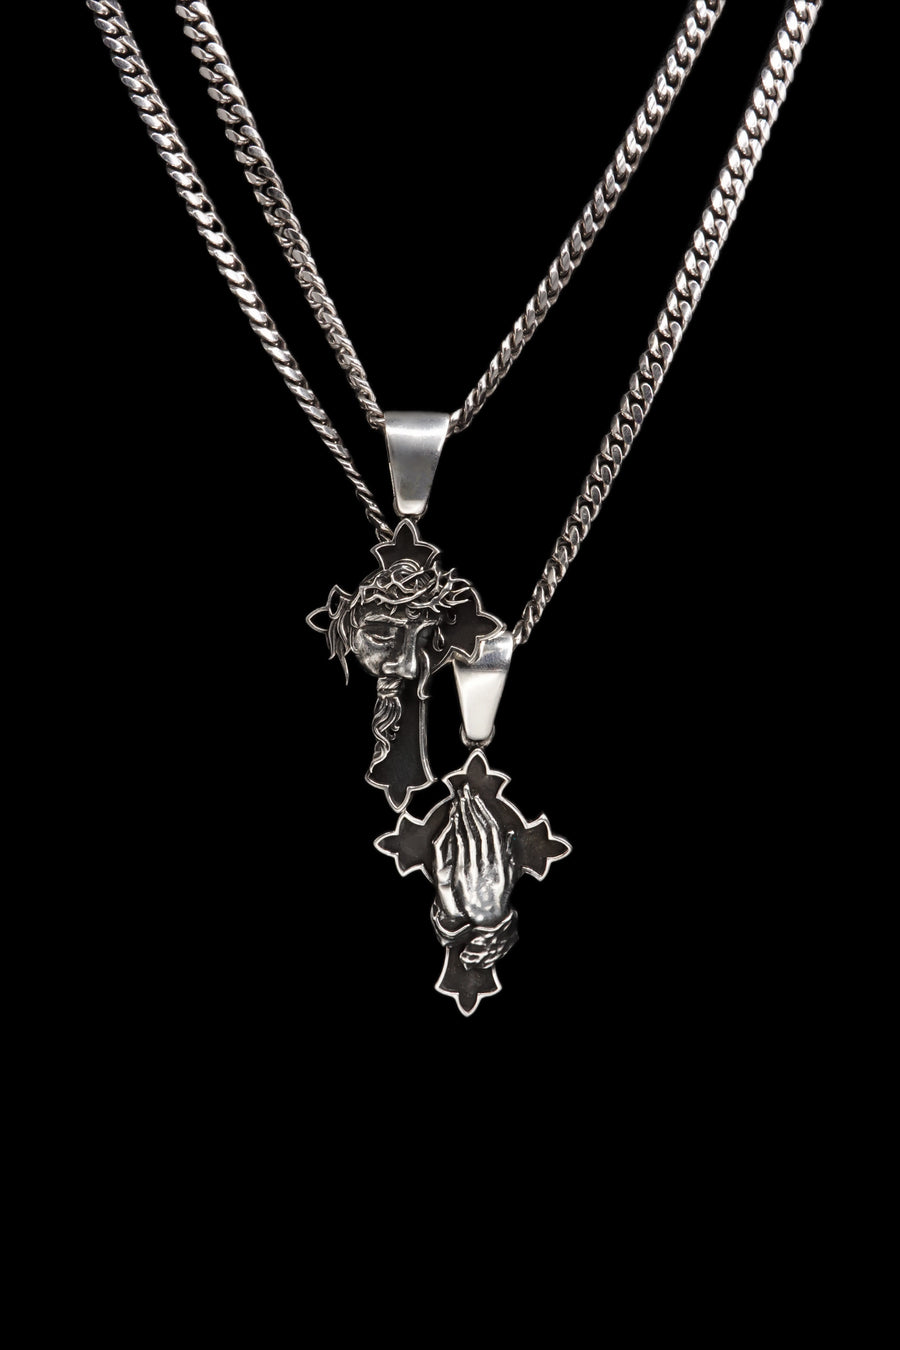 Jesus Piece Necklace With Antique Finish